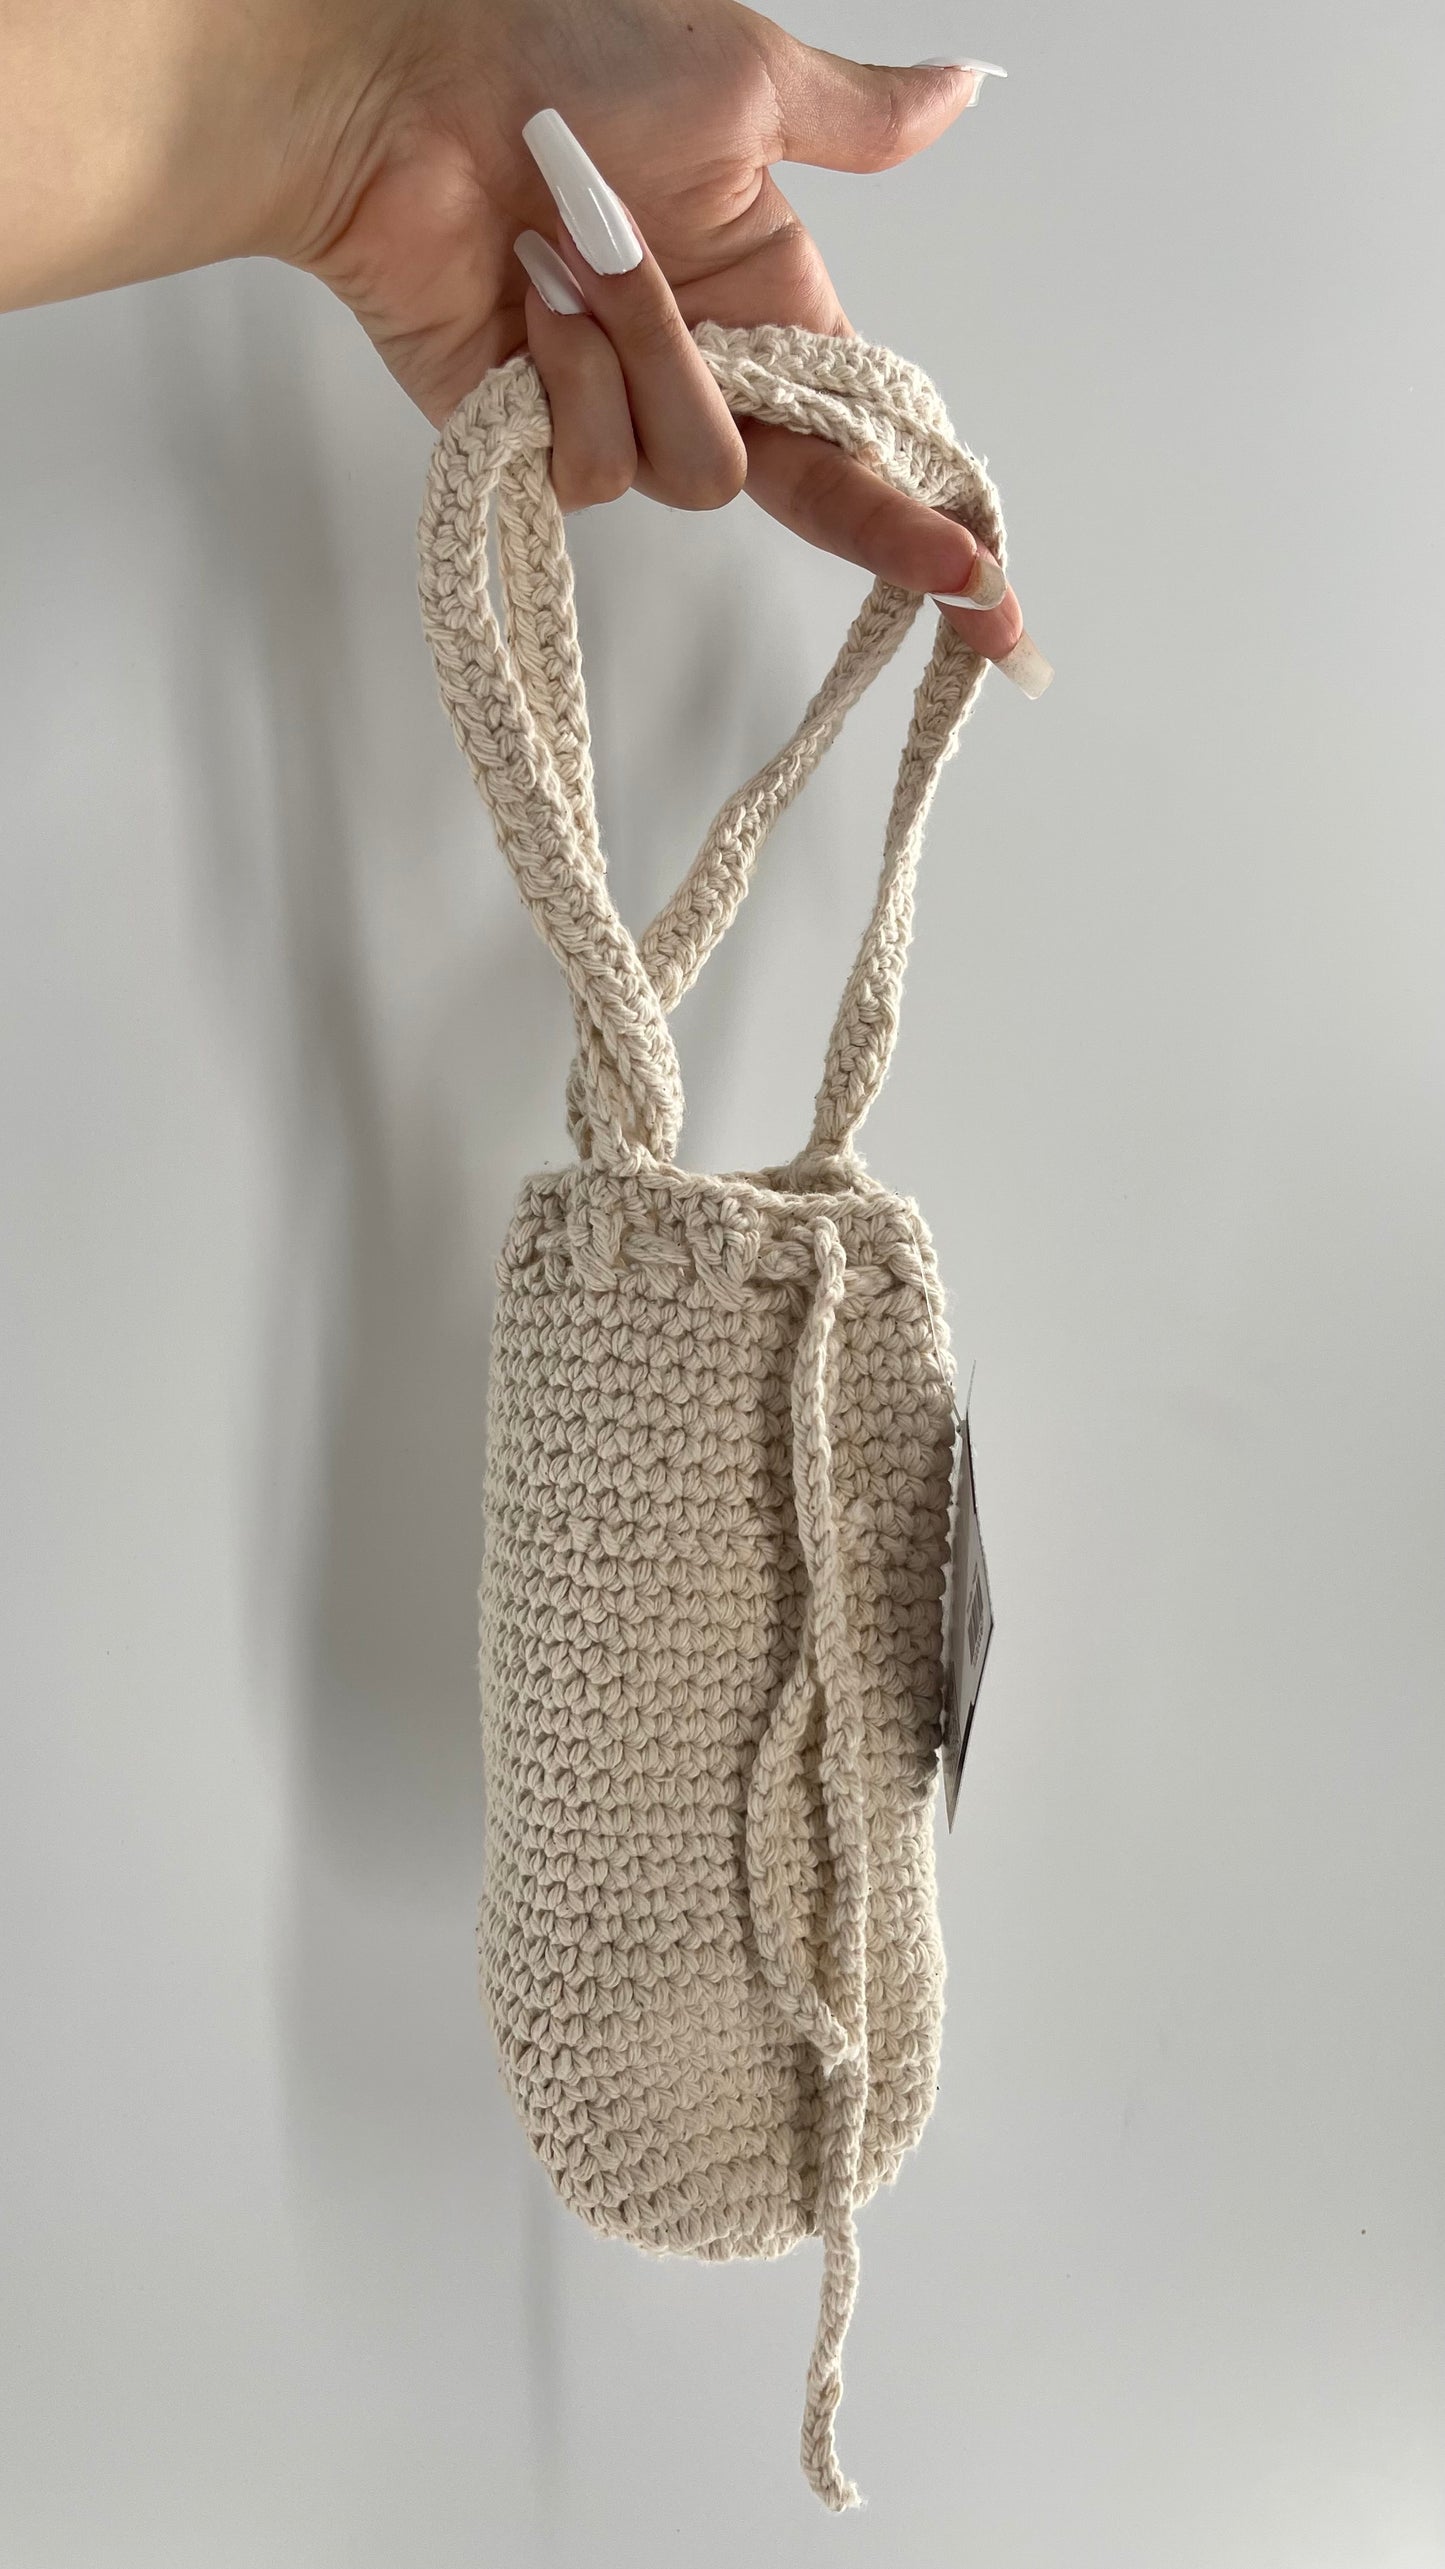 Imported Handmade Crochet Water Bottle Bag with Body/Shoulder Strap